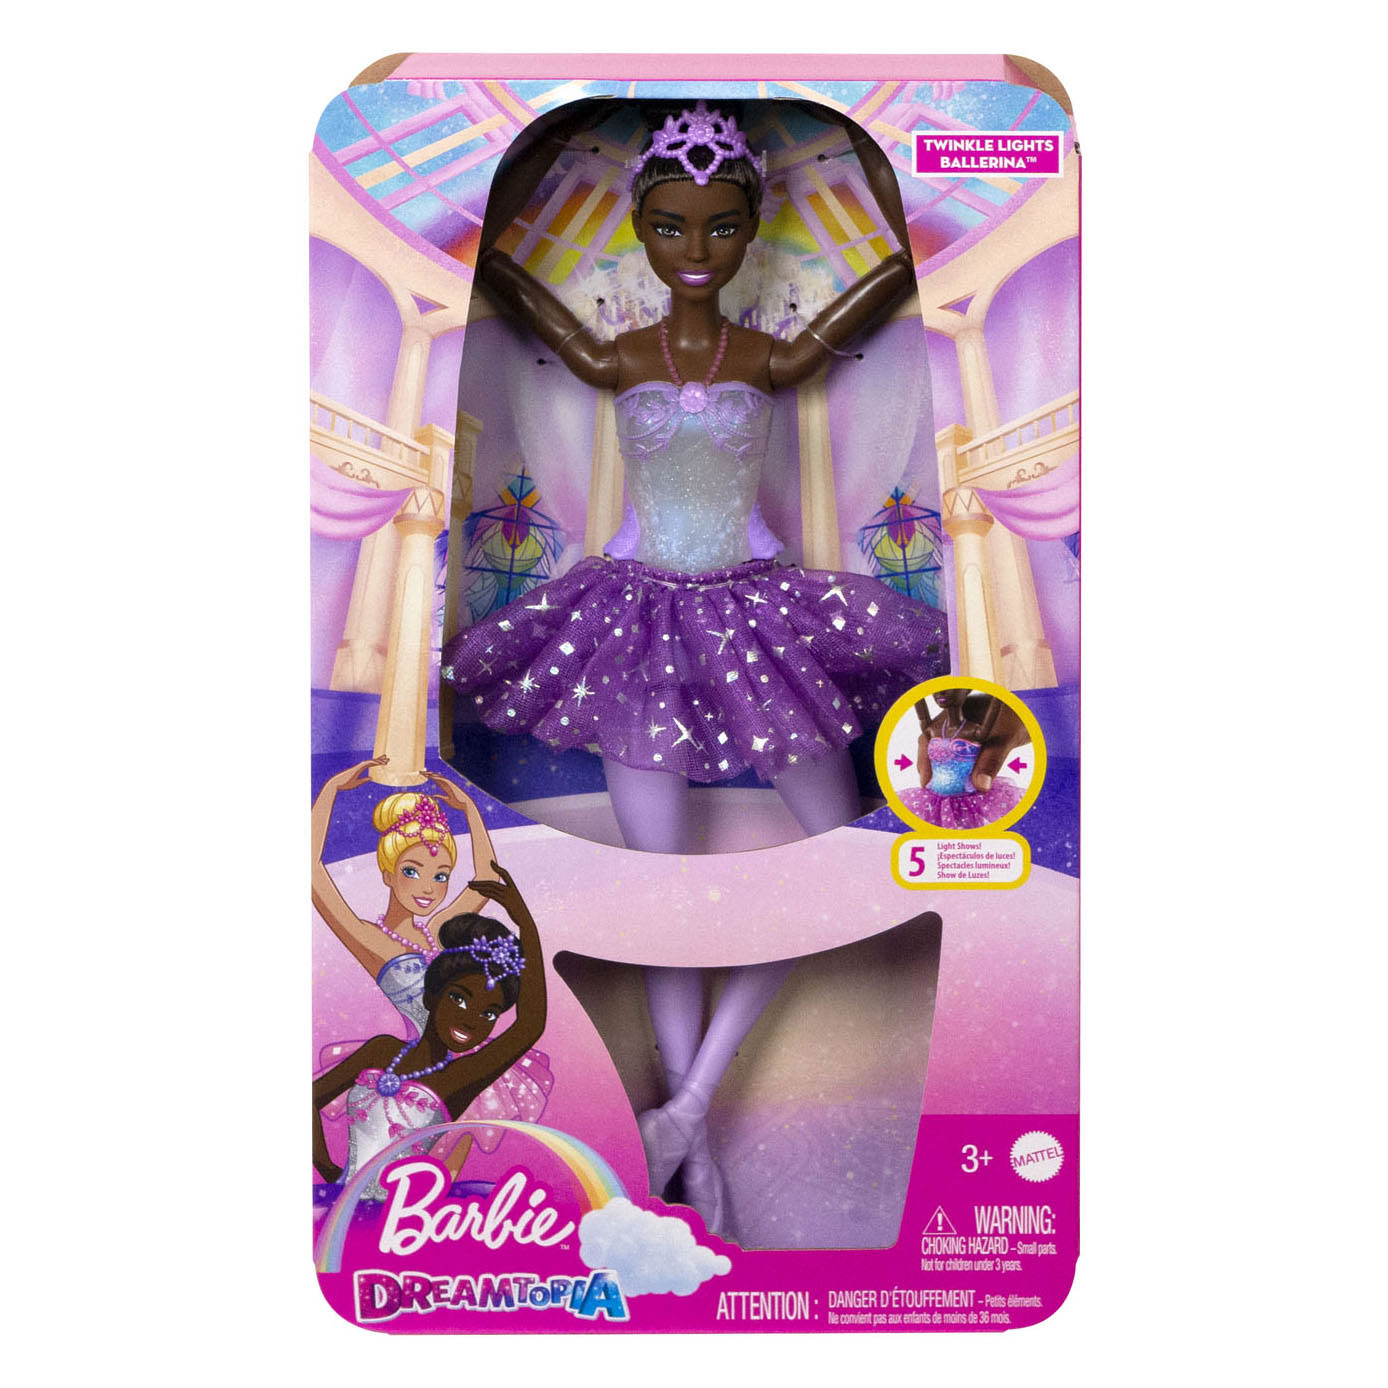 Barbie Dreamtopia Twinkle Lights Pop